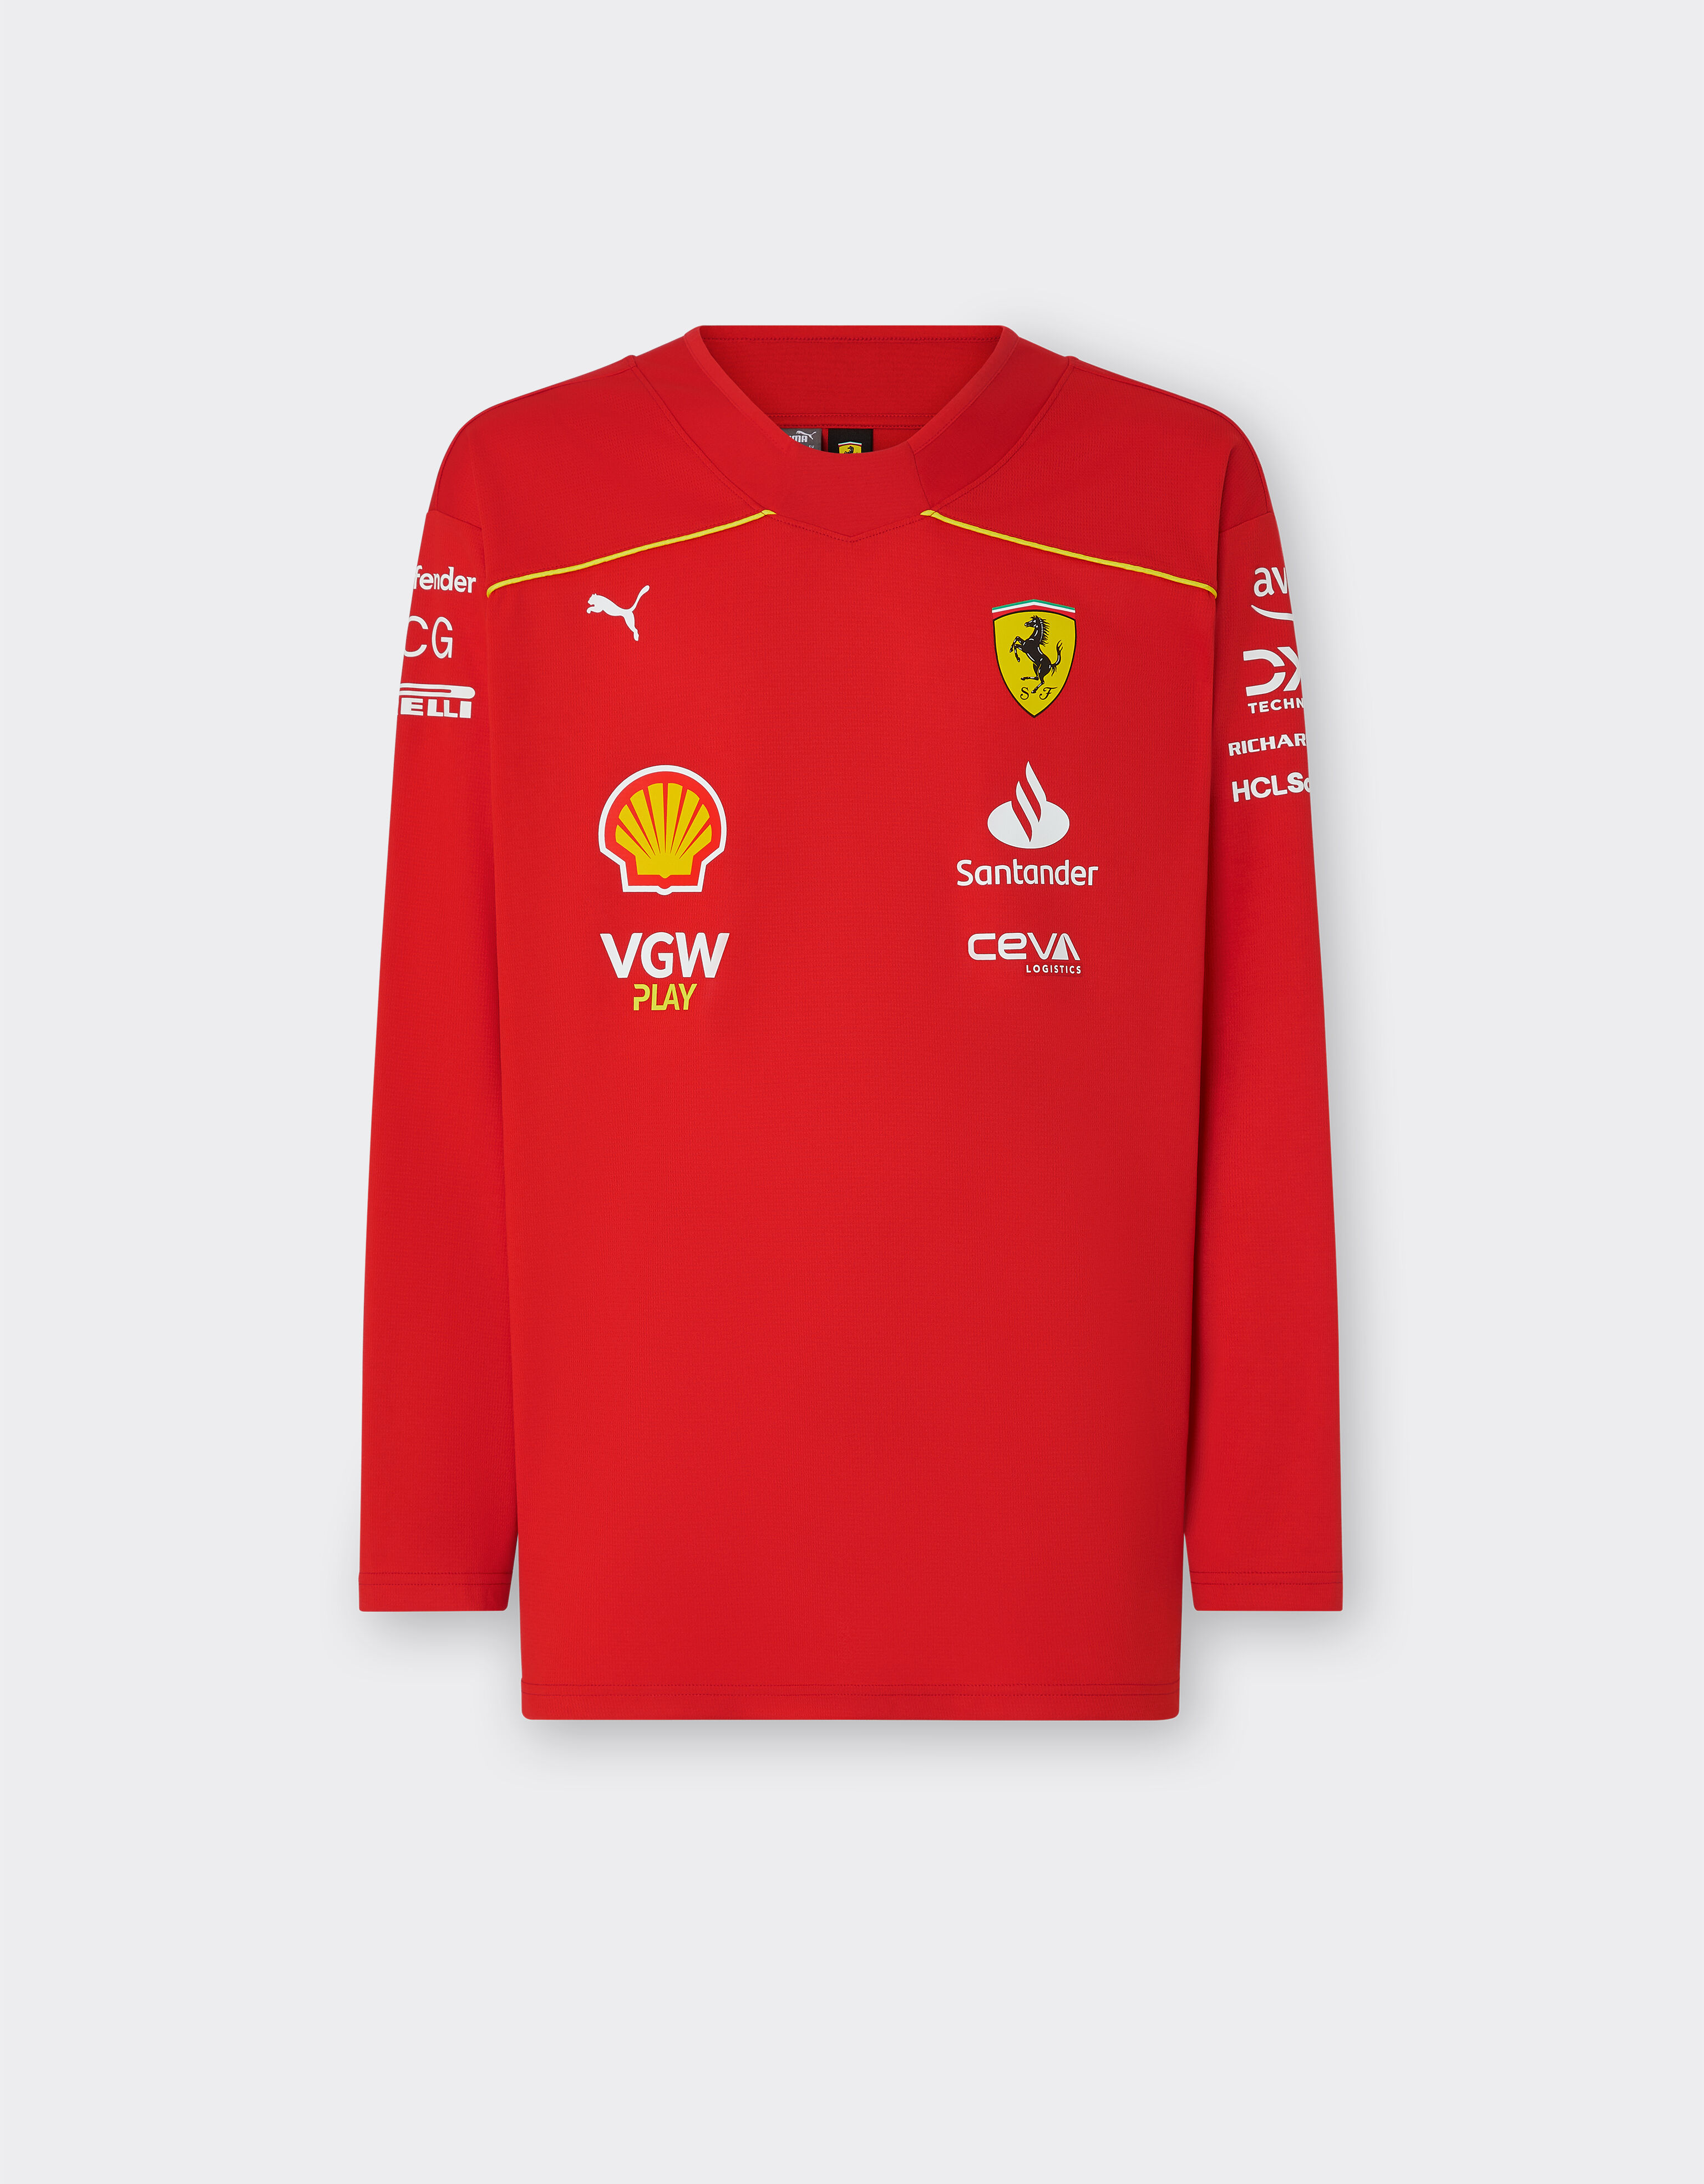 Ferrari Camiseta de hockey Puma de Sainz para la Scuderia Ferrari - Edición especial Canadá Rosso Corsa F1338f